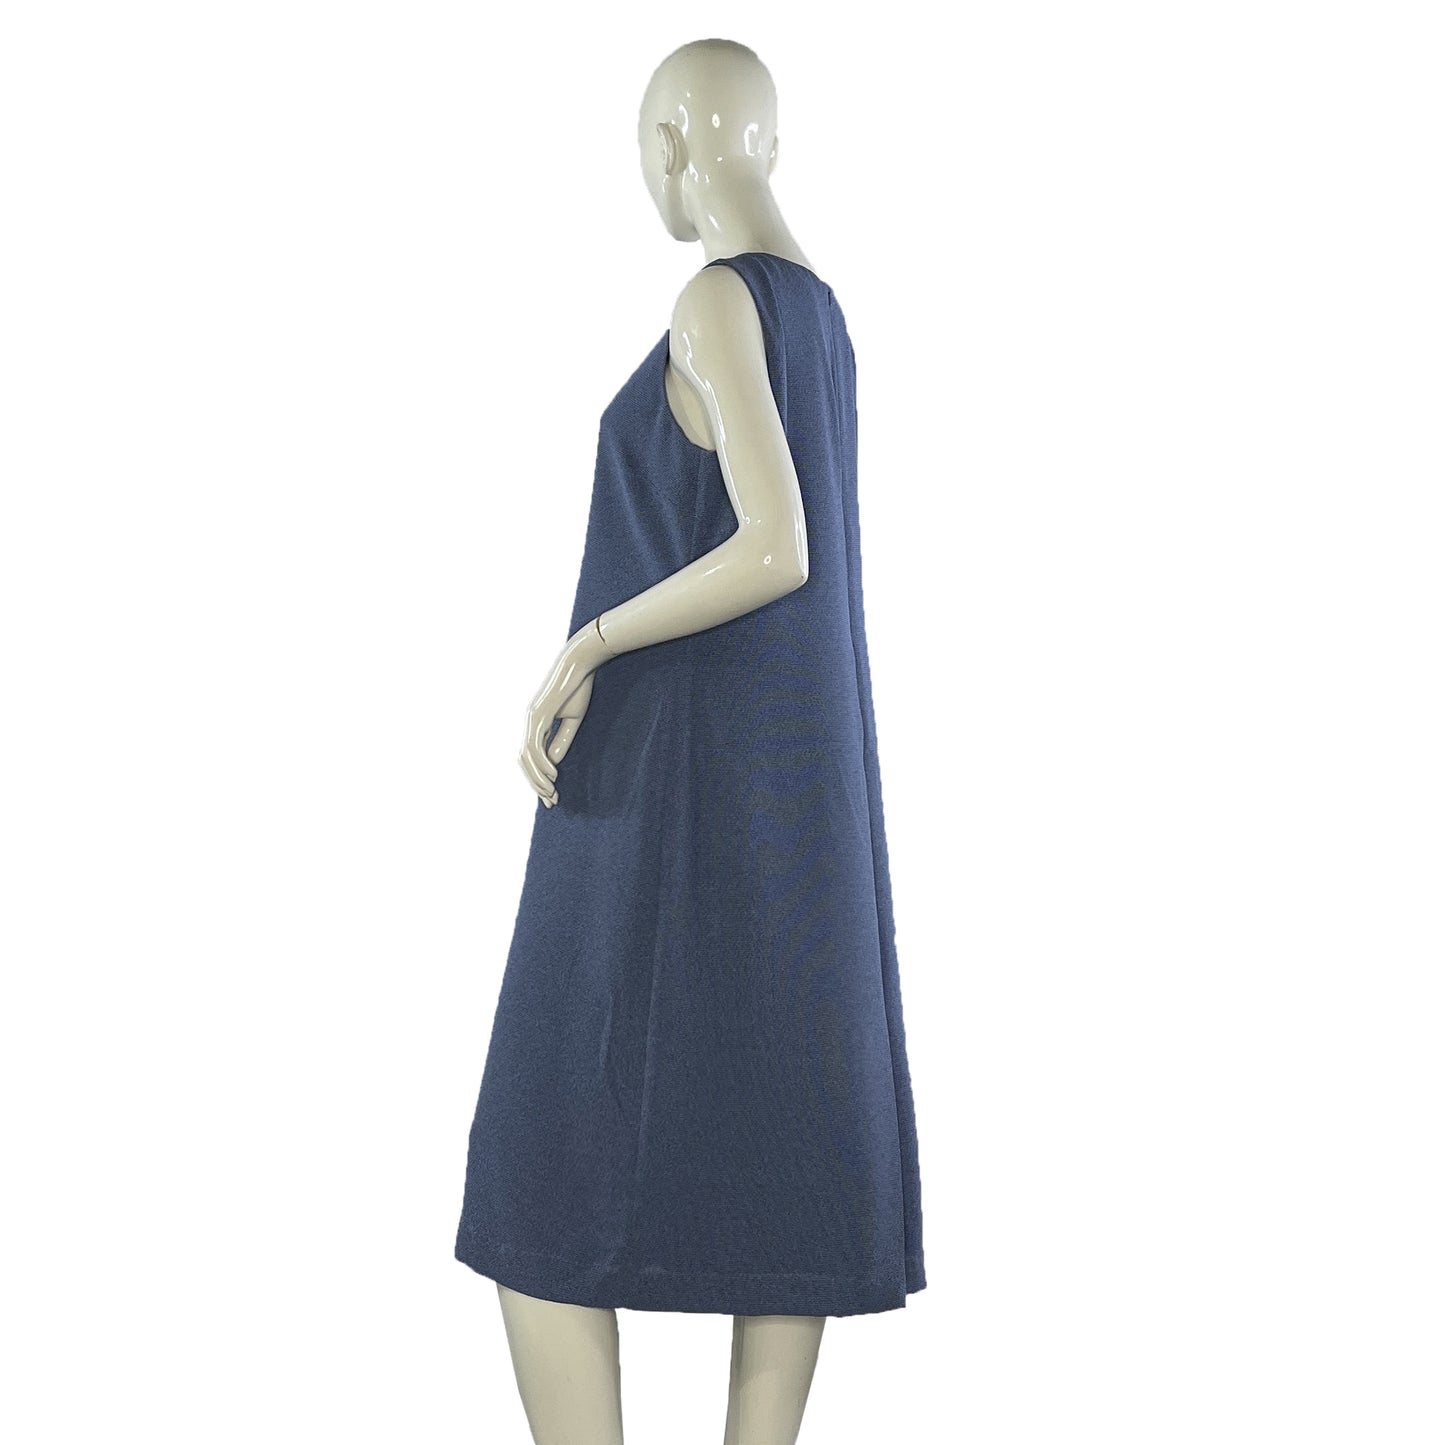 Talbots Dress Sleeveless Below-Knee Periwinkle Size 14 SKU 000414